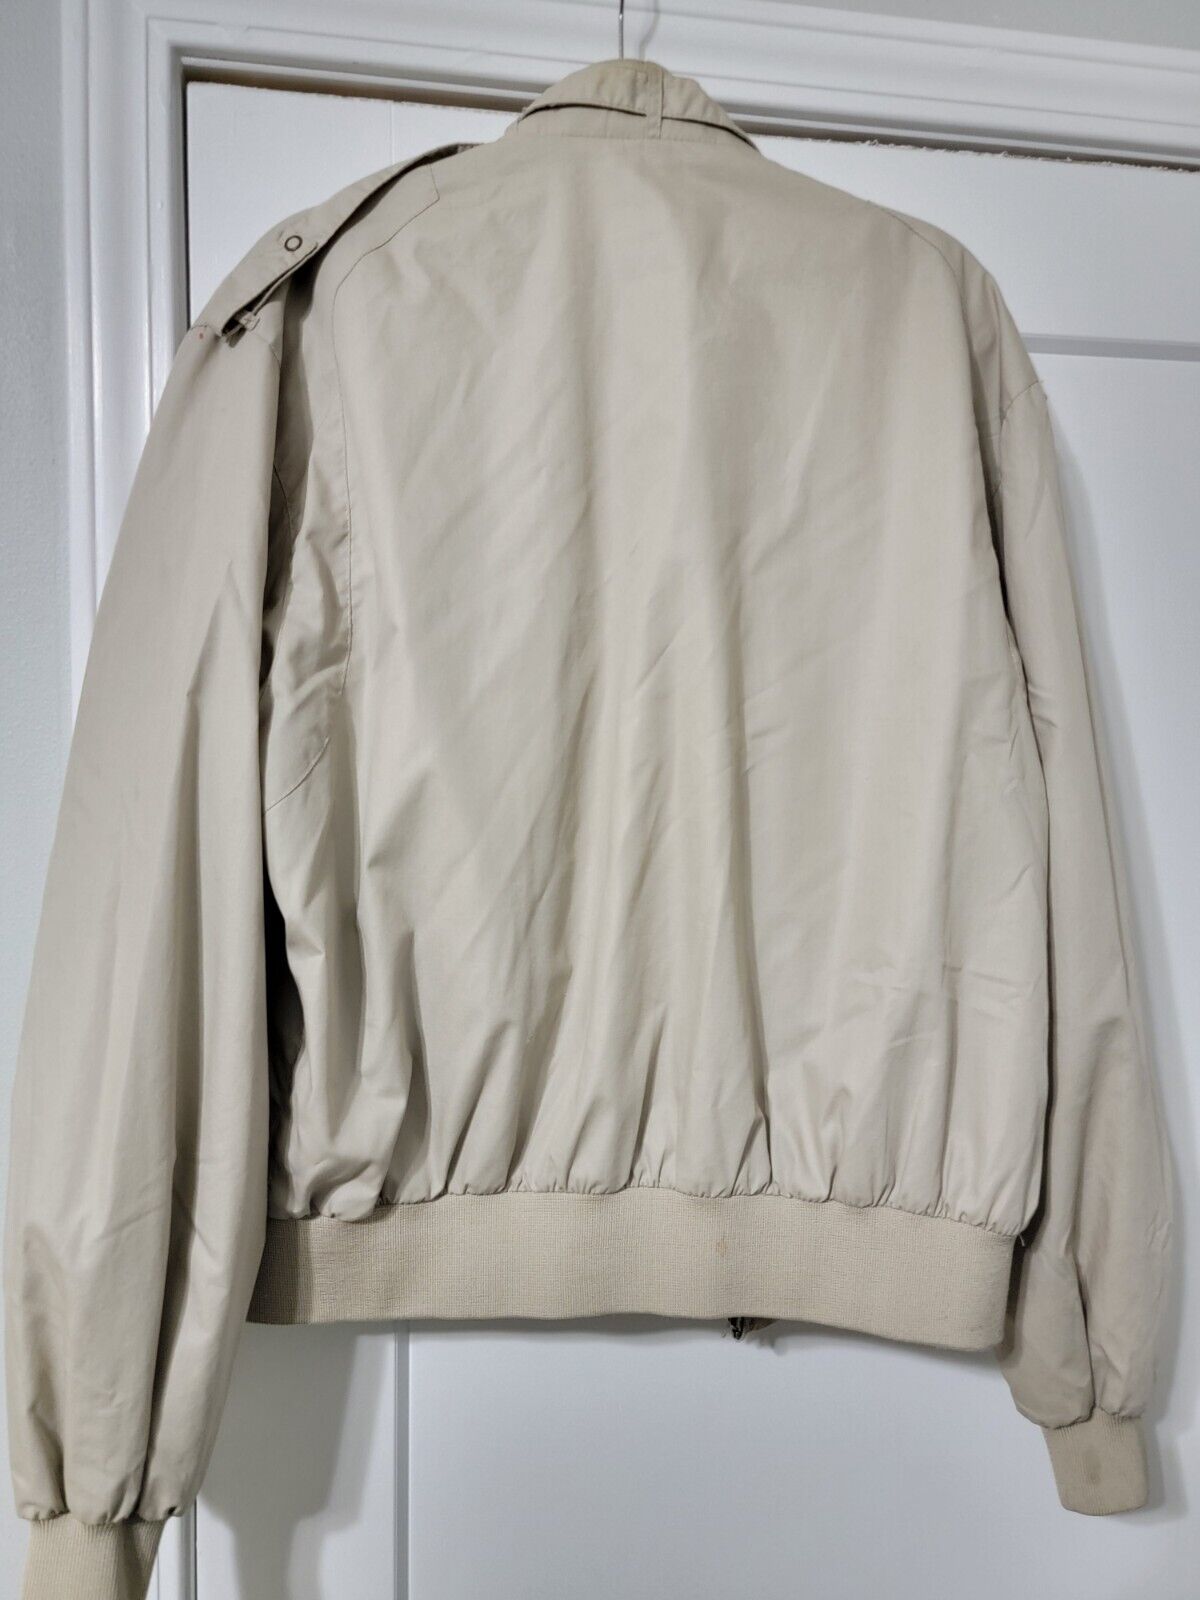 Members Only Jacket, Size 46, Cream | eBay